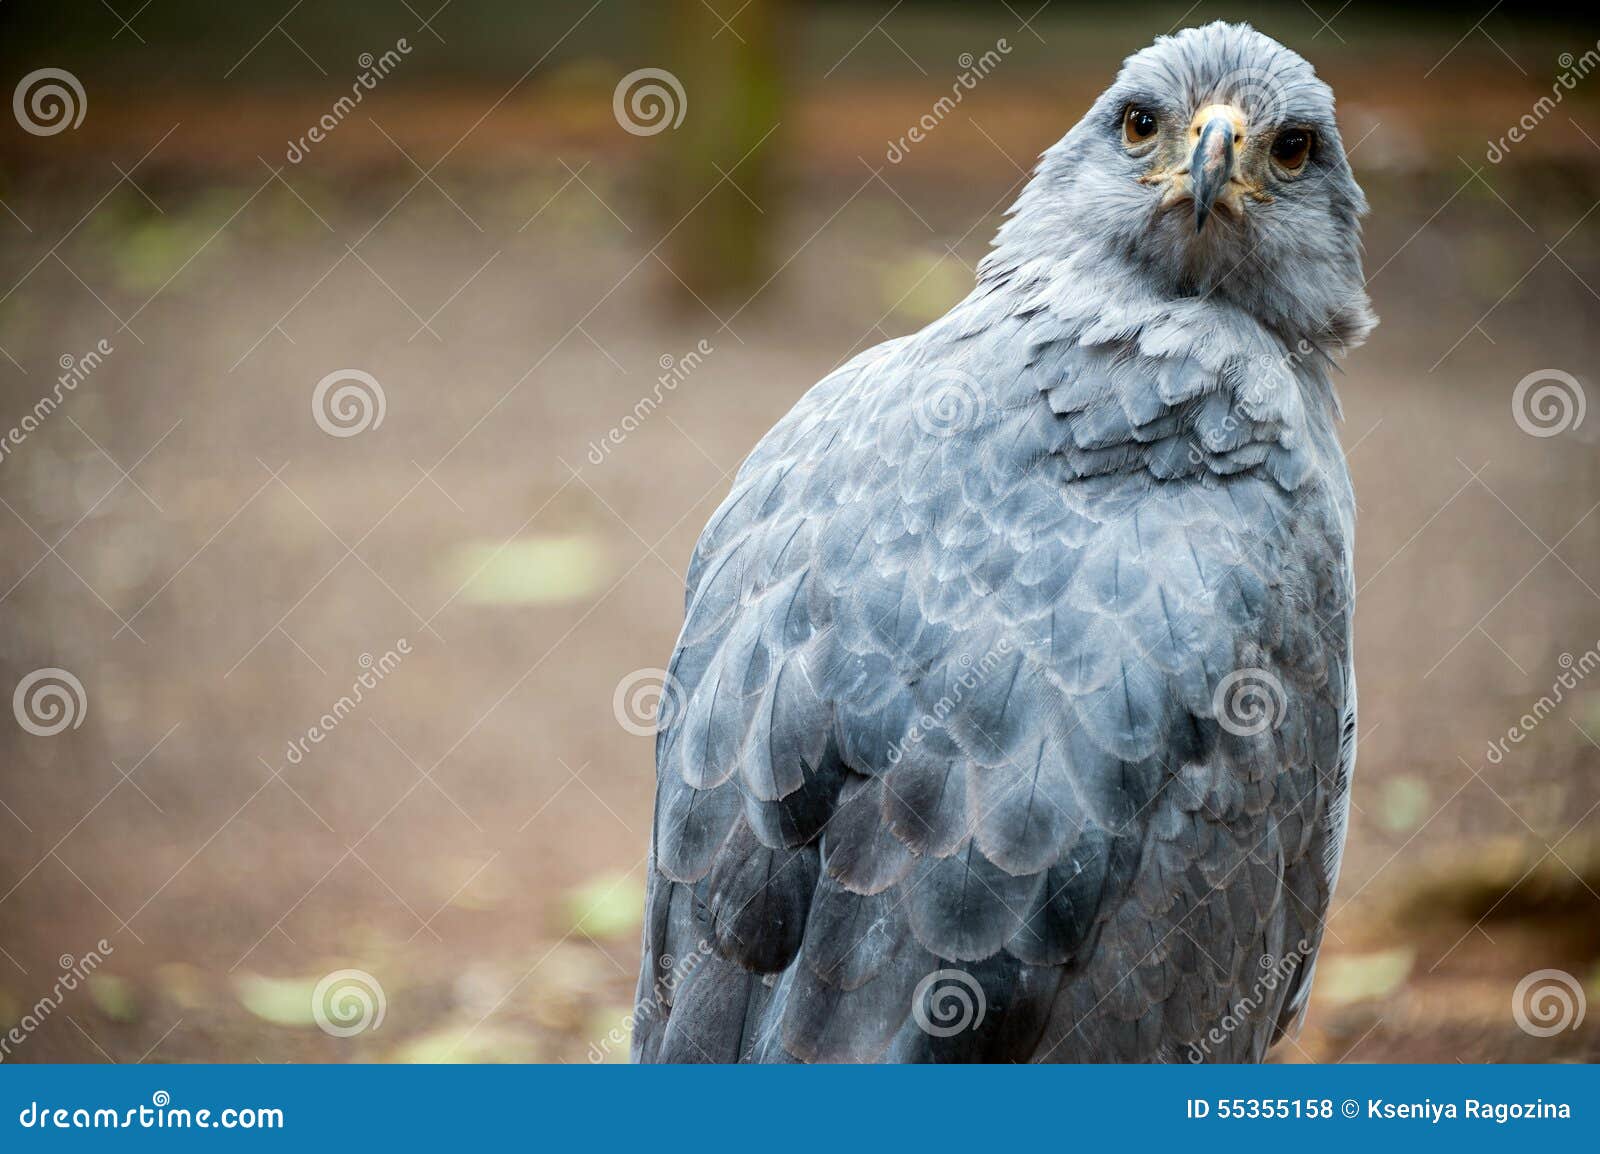 crowned solitary eagle, puerto iguazu, south america